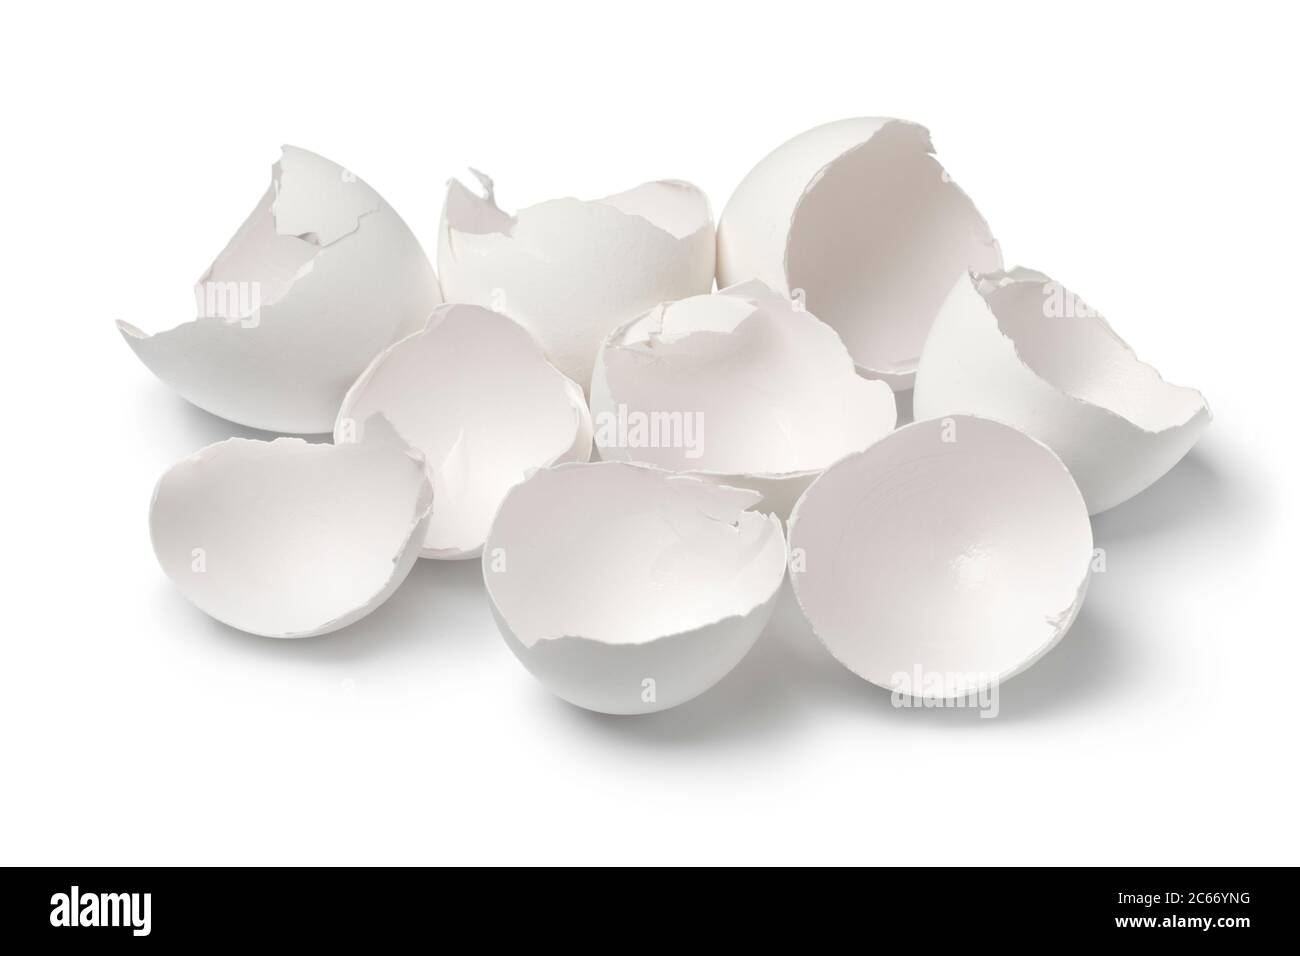 White broken egg shells close up on white background Stock Photo